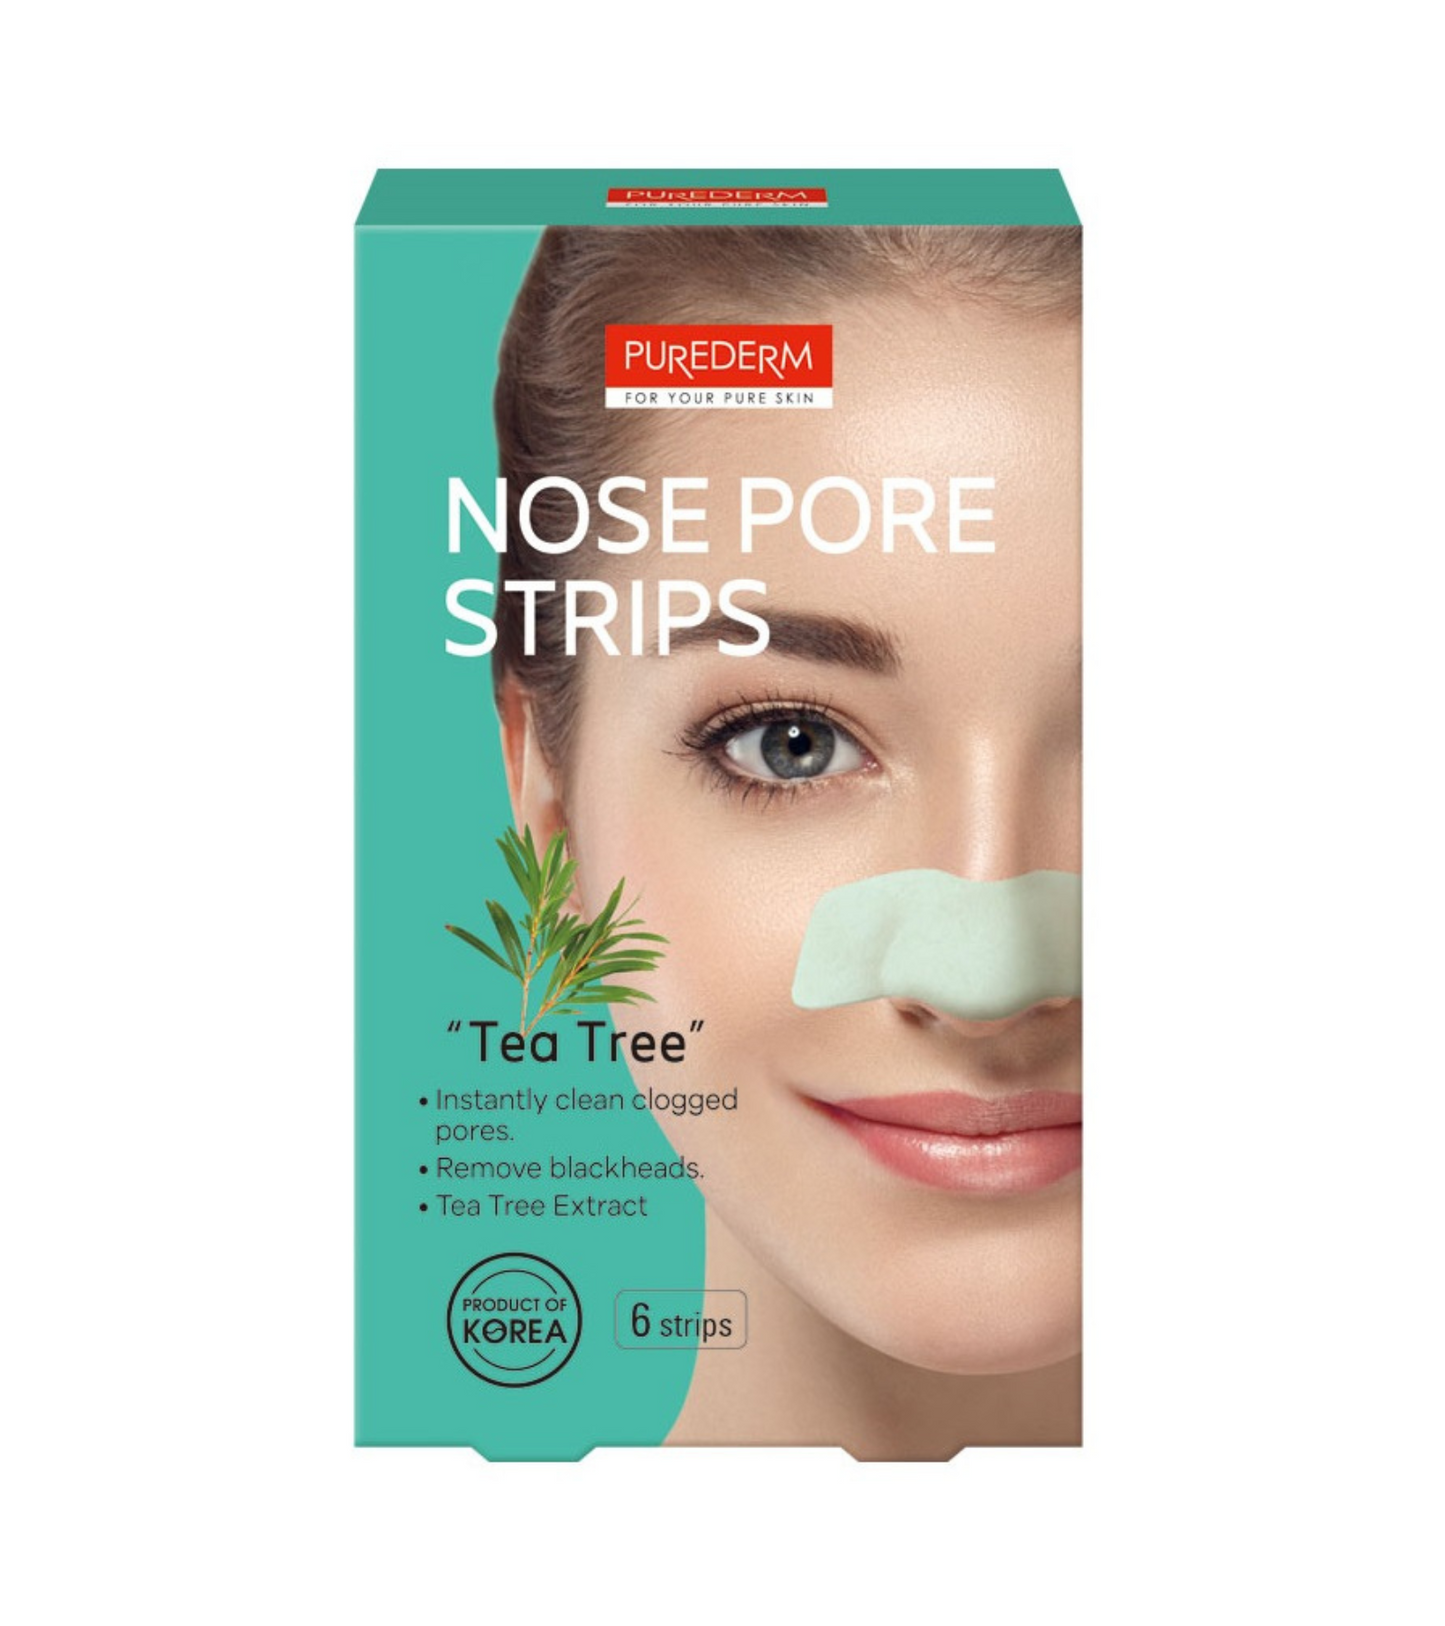 Nose Pore Strips "Tea Tree"